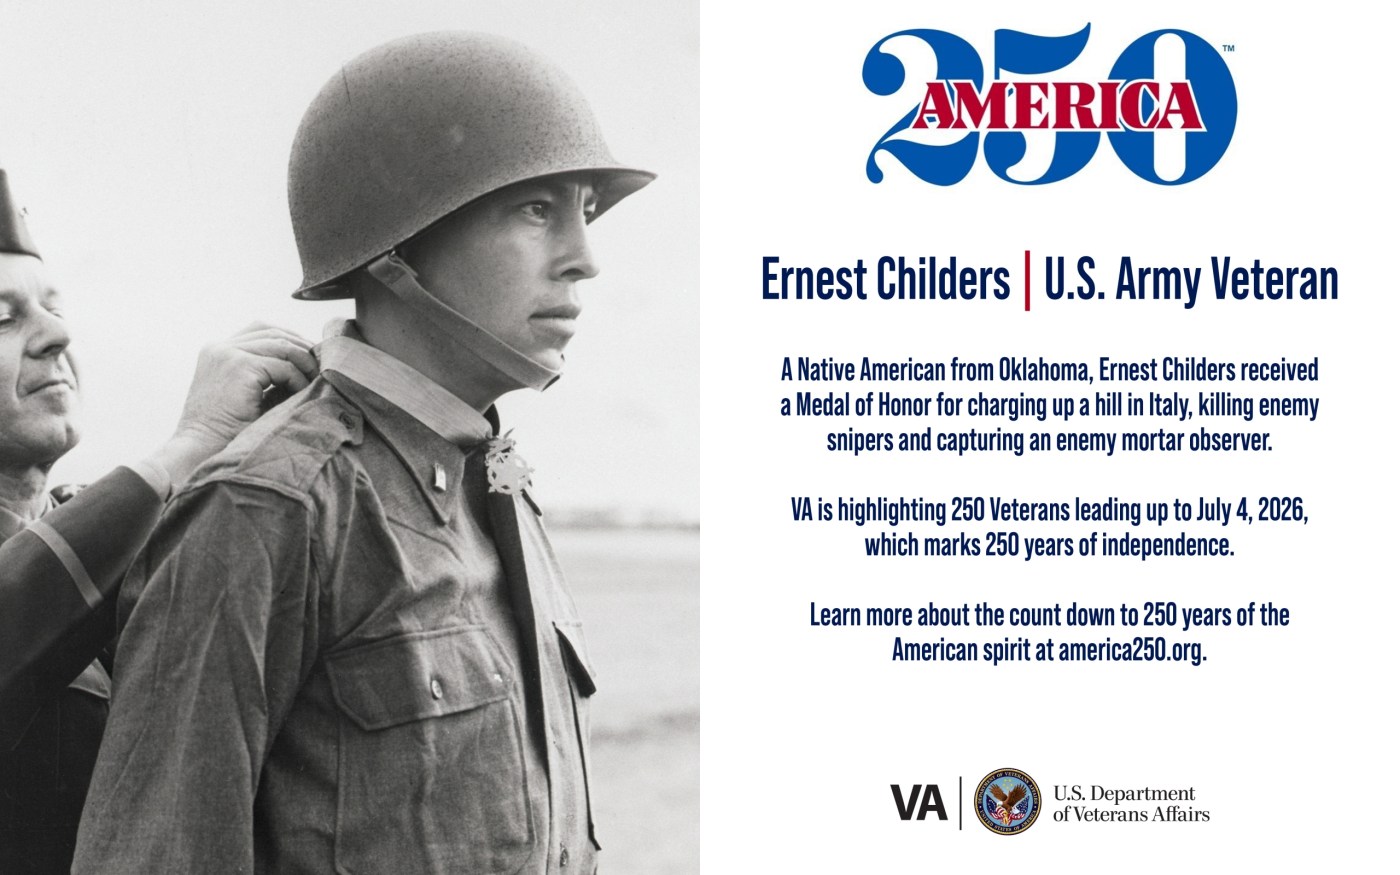 America250: Army Veteran Ernest Childers